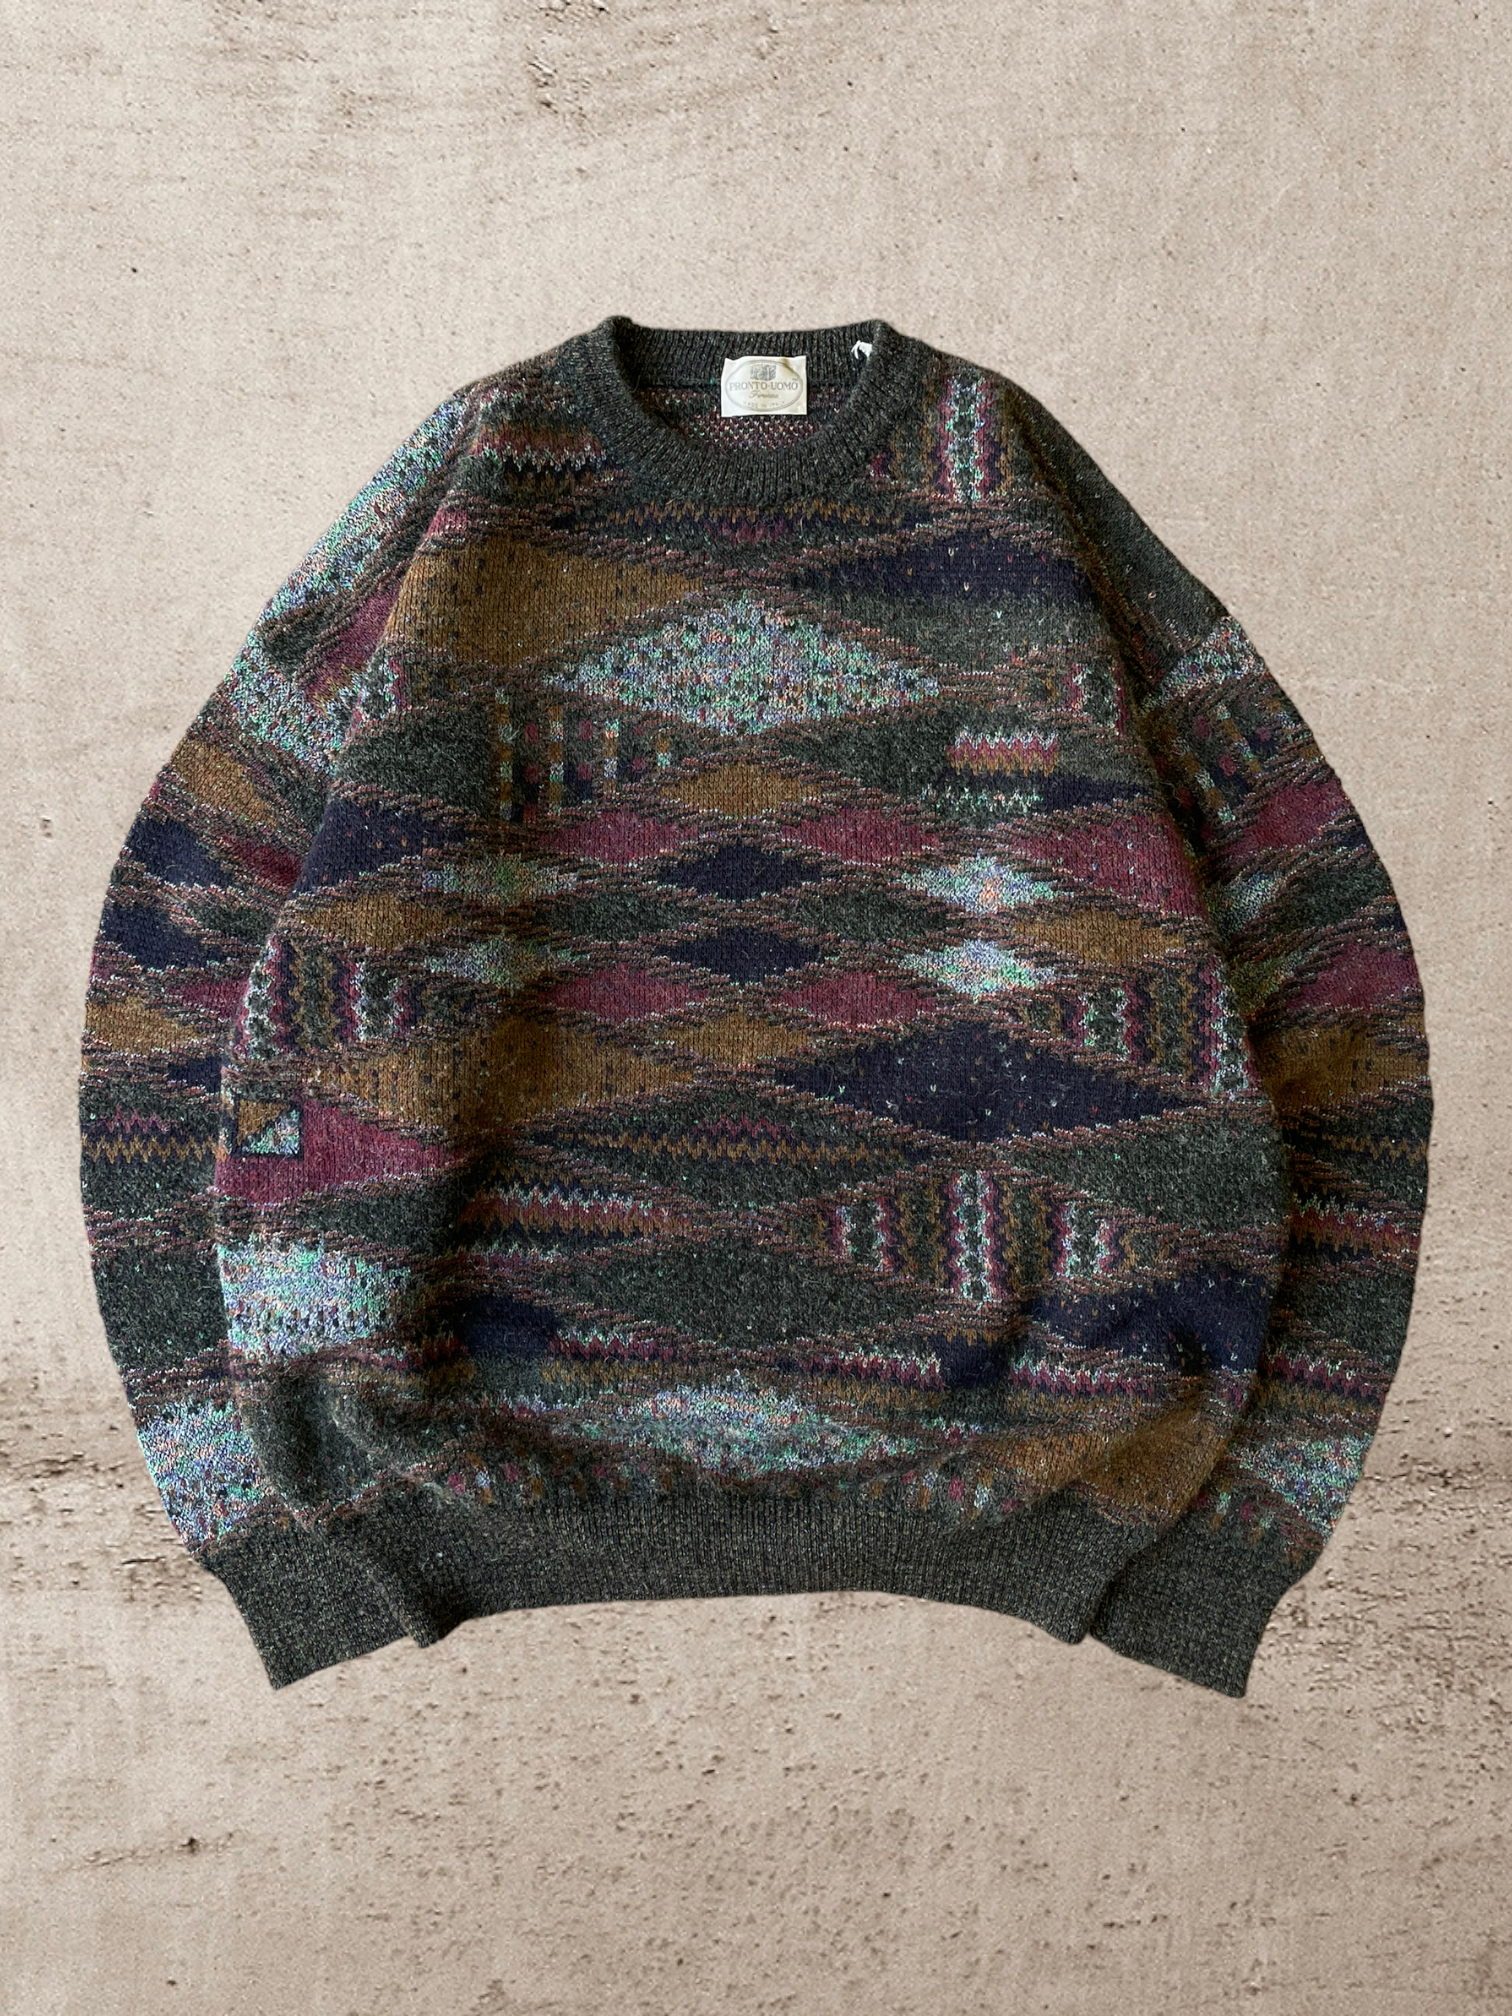 90s Multicolor Knit Sweater - XL